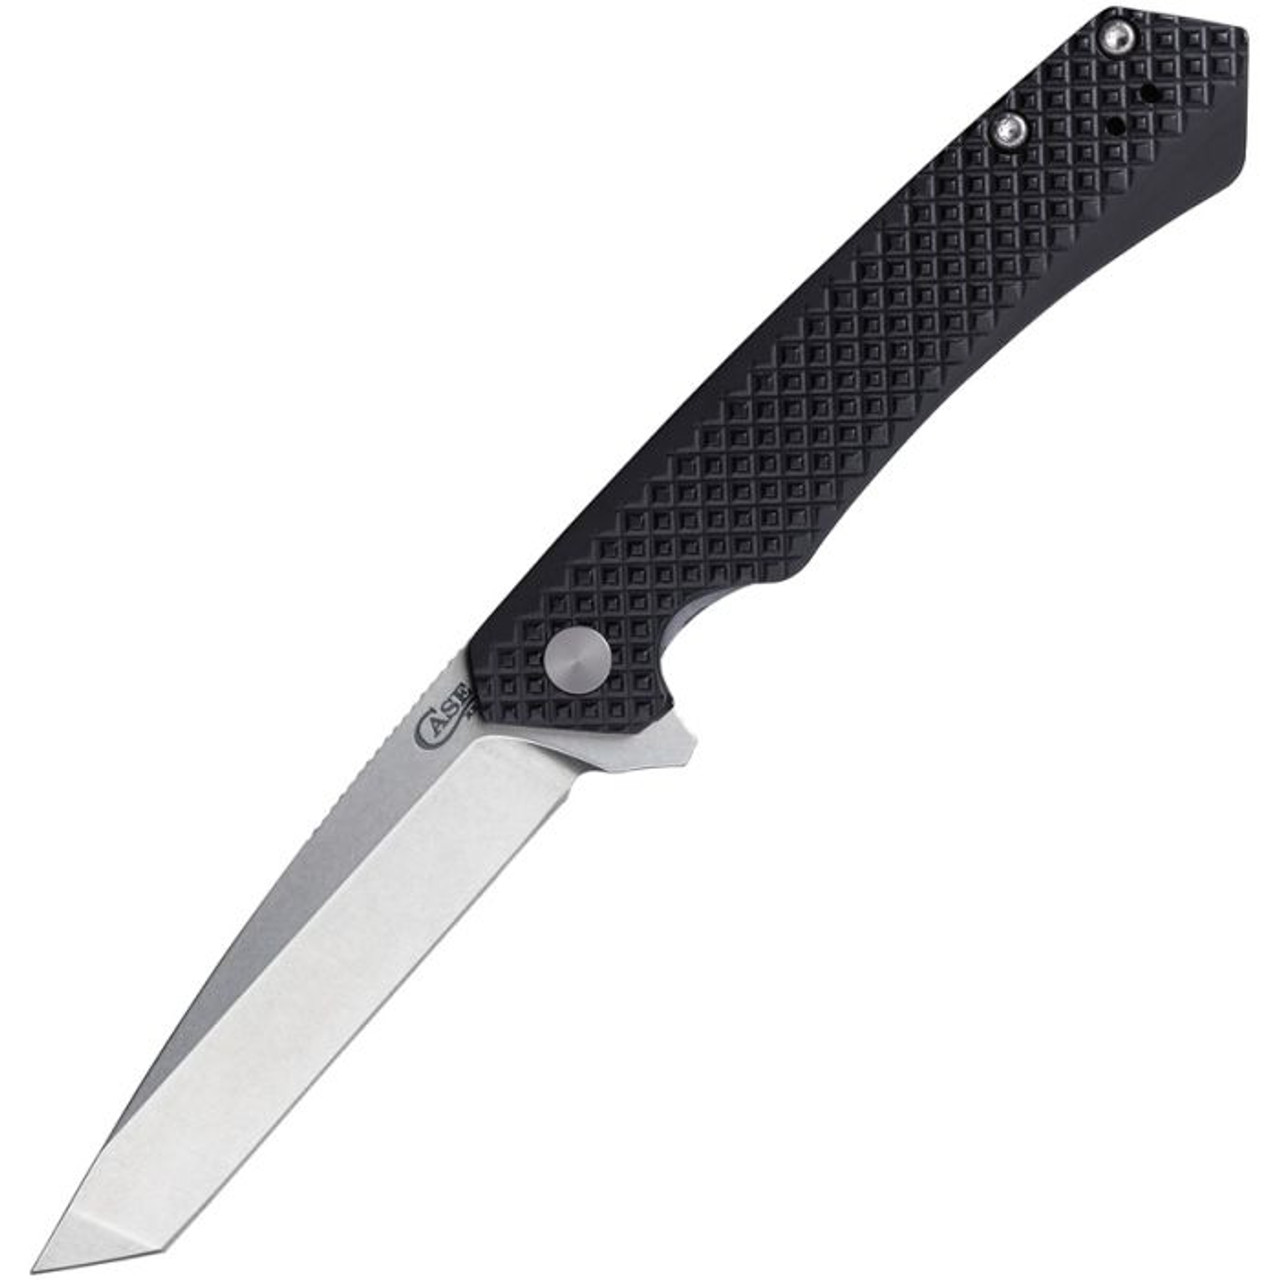 Case Kinzua Flipper Knife (64684) - 3.4" CPM-S35VN Tanto Point Blade, Black Textured Anodized Aluminum Handle